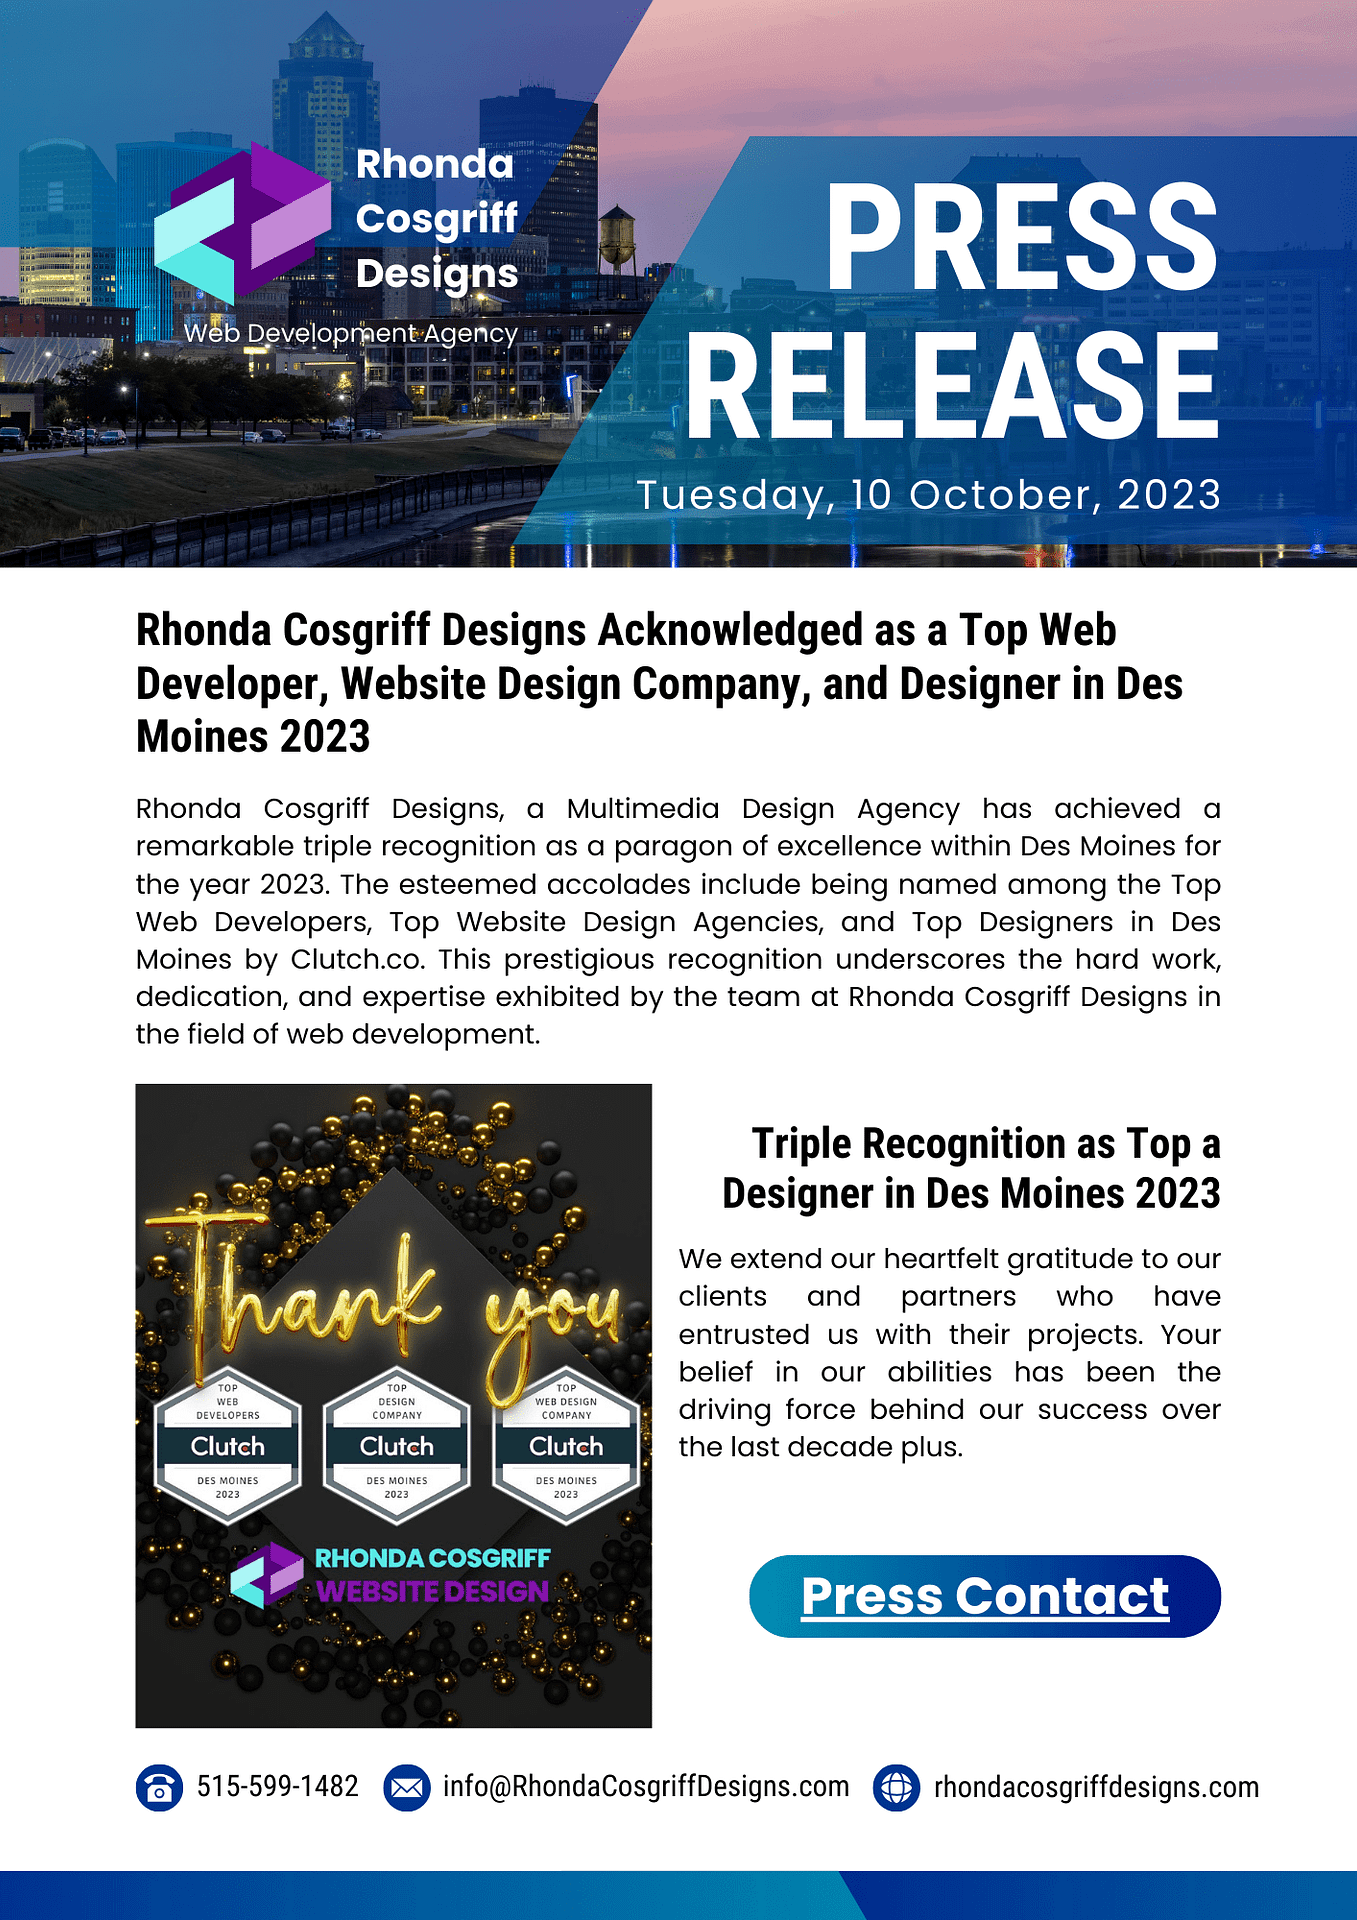 Press release: Triple Recognition as a Top Designer in Des Moines